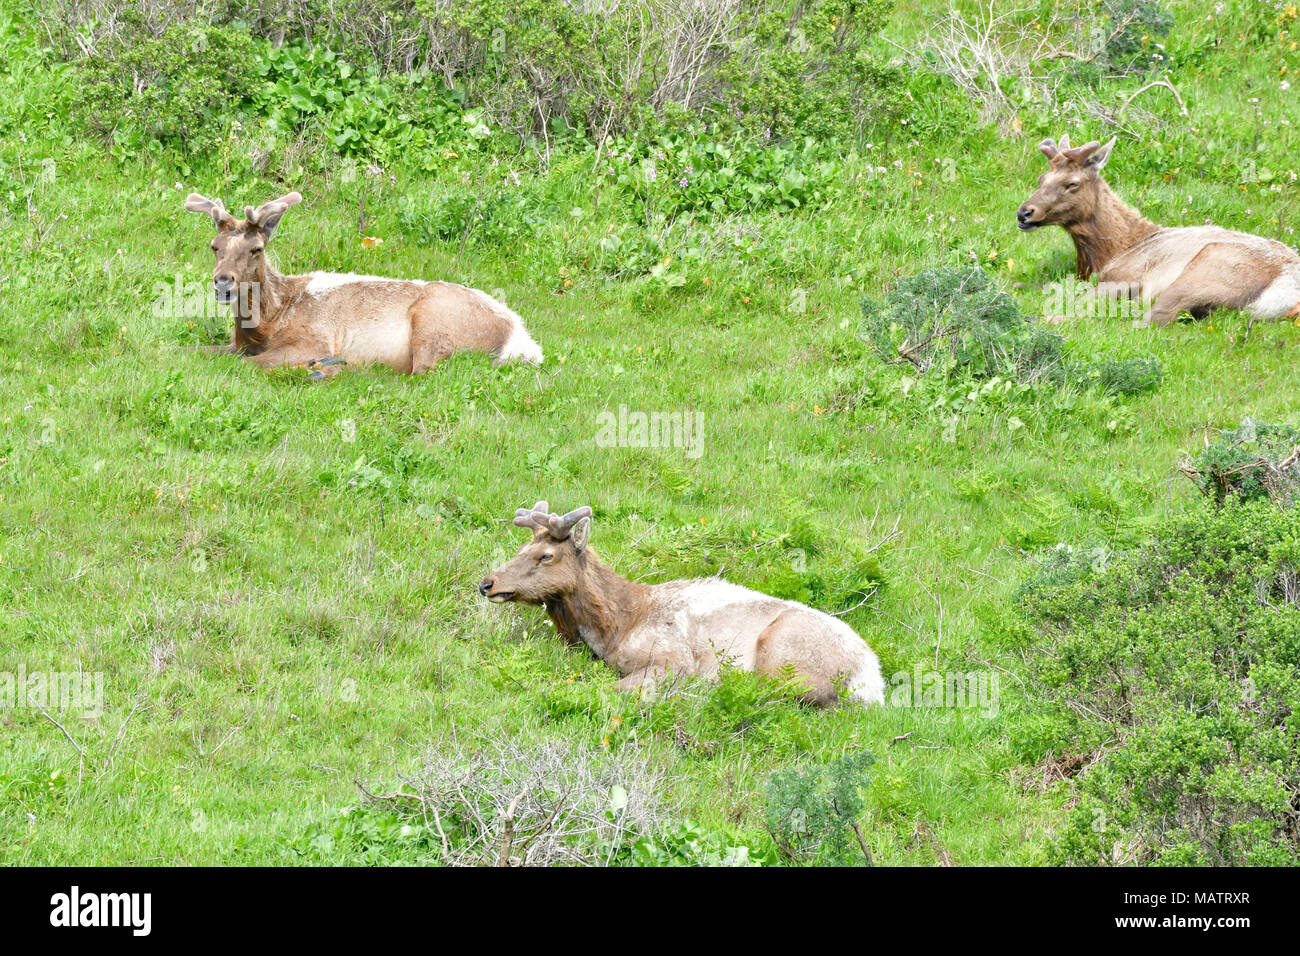 Tule Elk Tomale Elks en reserva Foto de stock